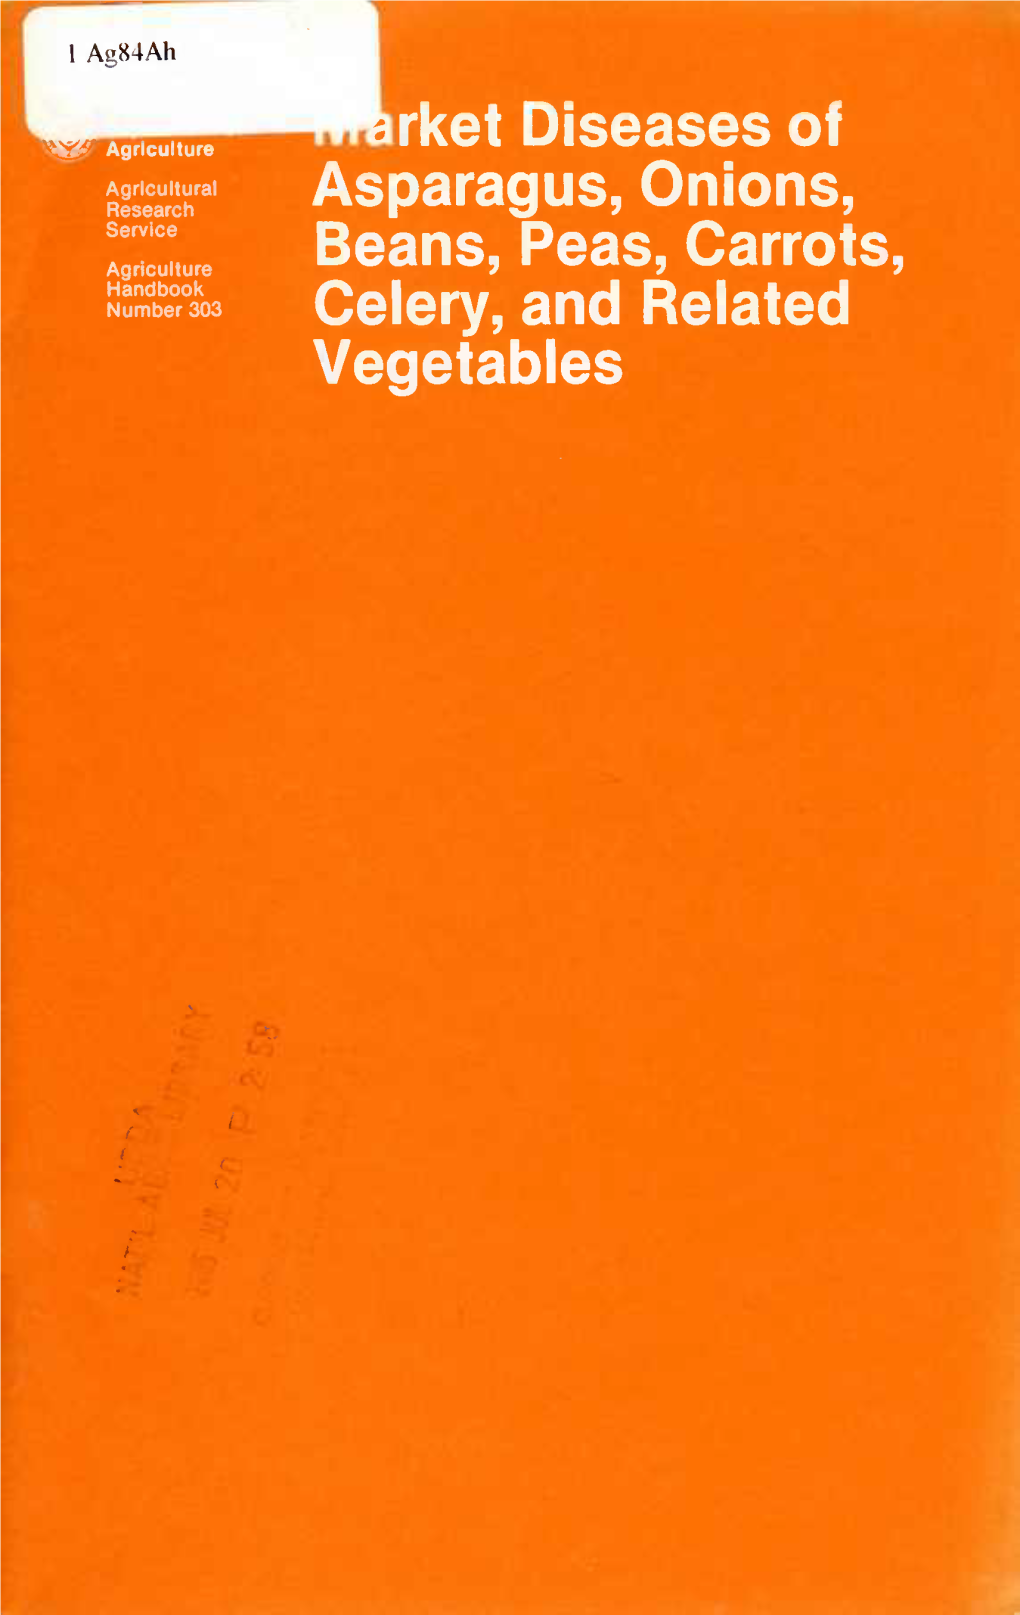 Jrket Diseases of Asparagus, Onions, Beans, Peas, Carrots, Celery, And